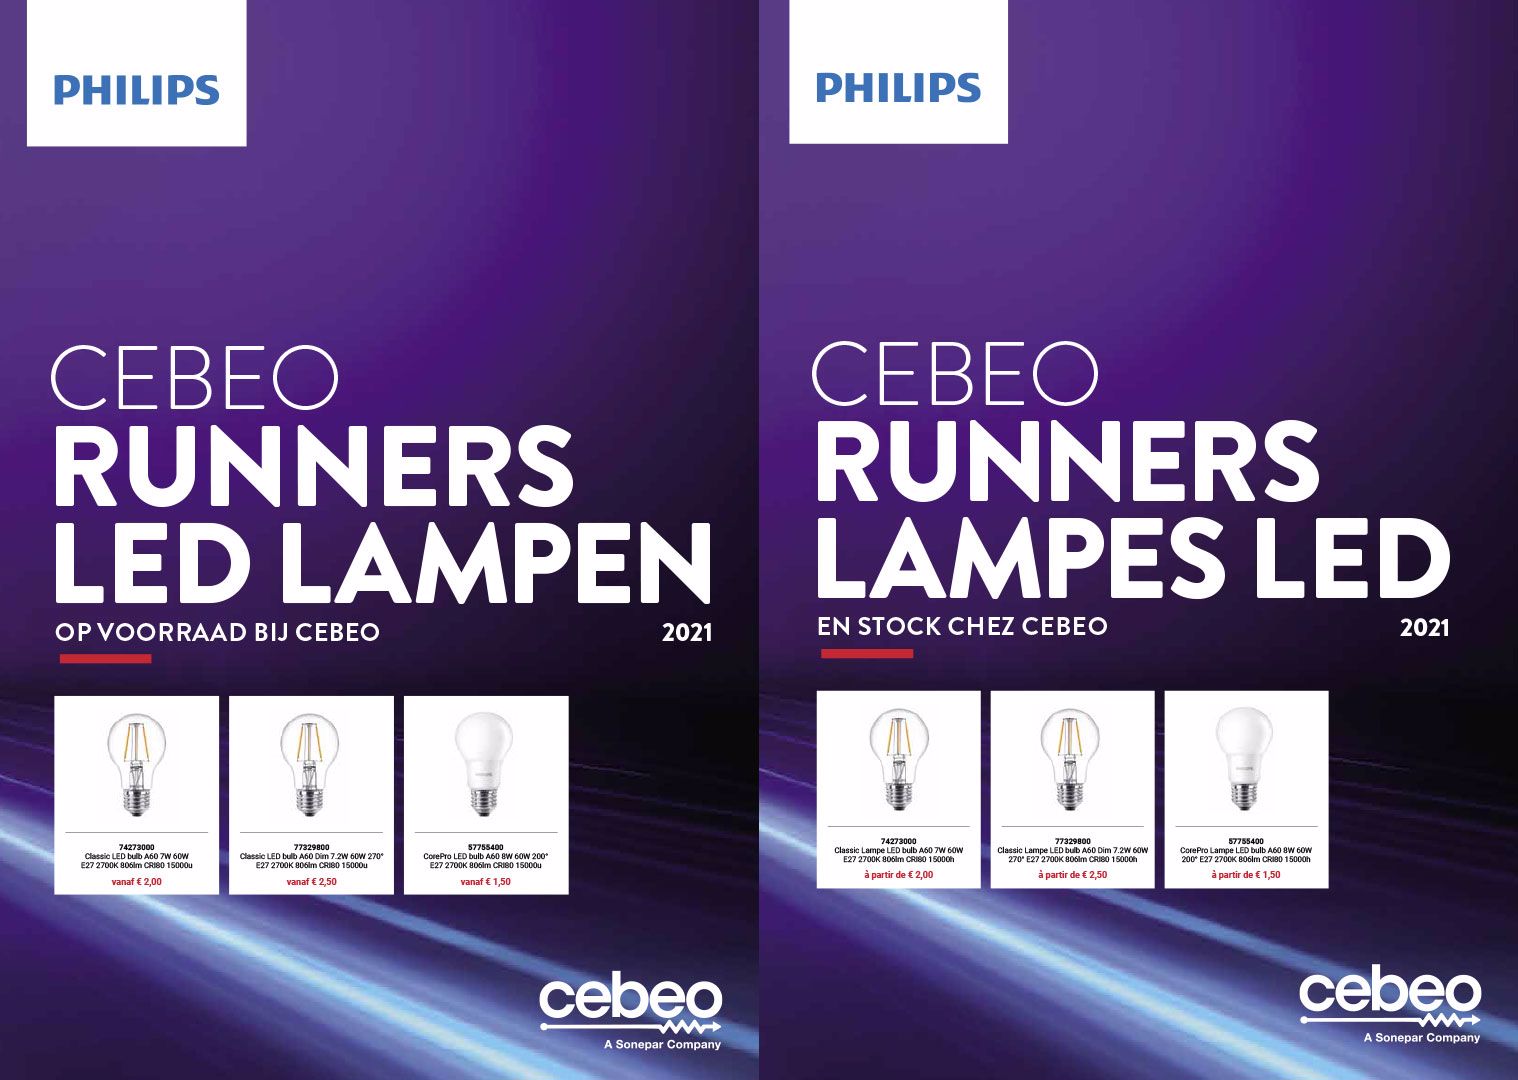 Cebeo runners LED lampen - Philips